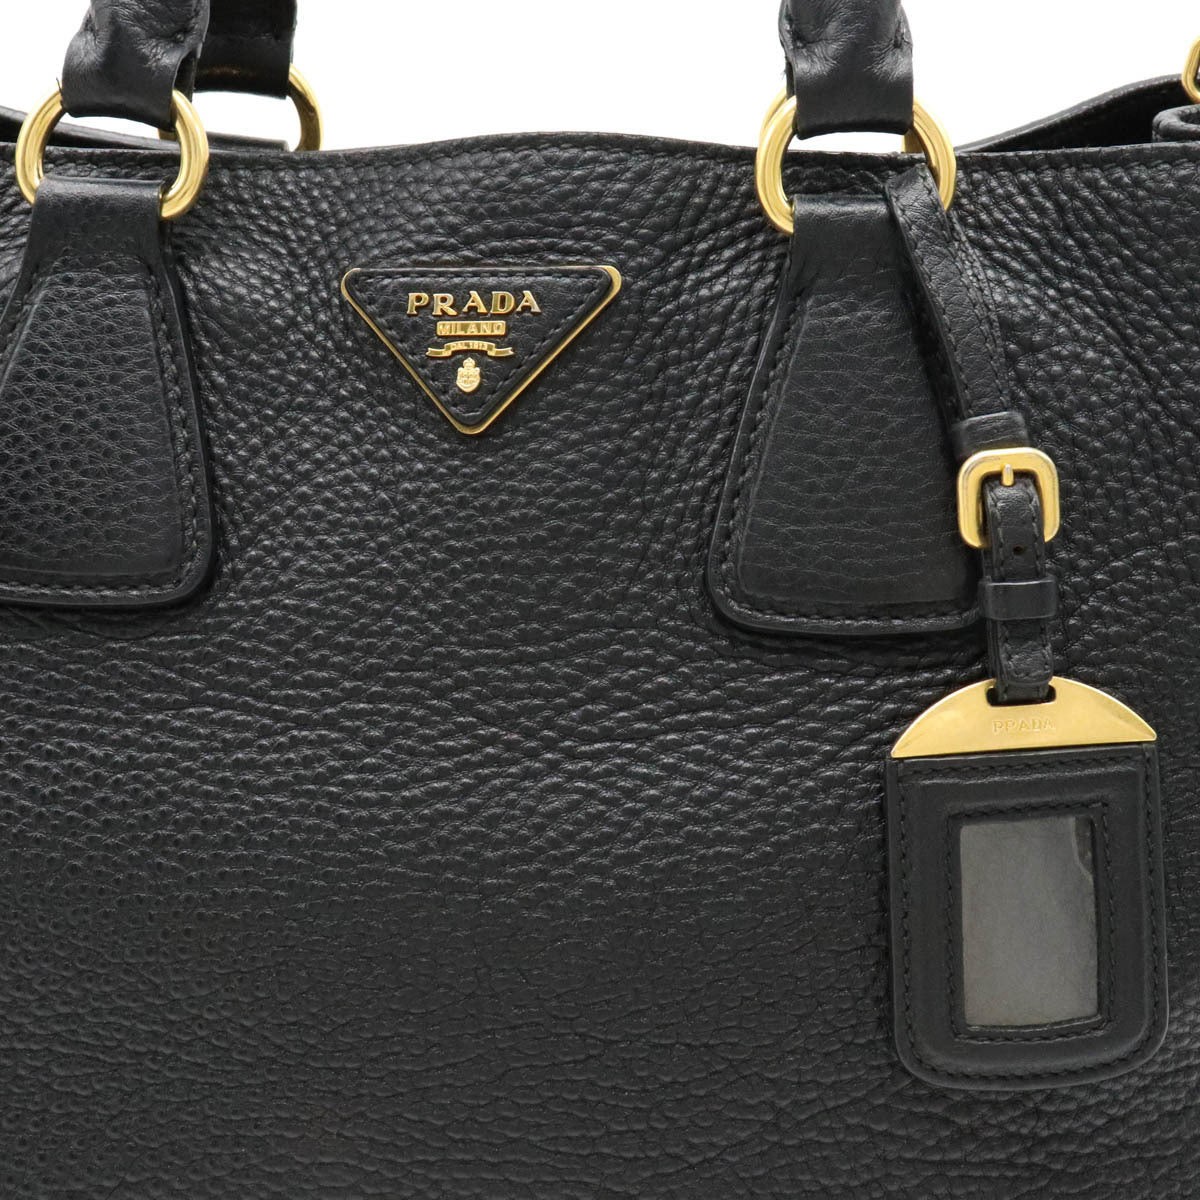 PRADA Necessaire VIT/DAINO PRINT Shoulder Bag With Authentication | eBay